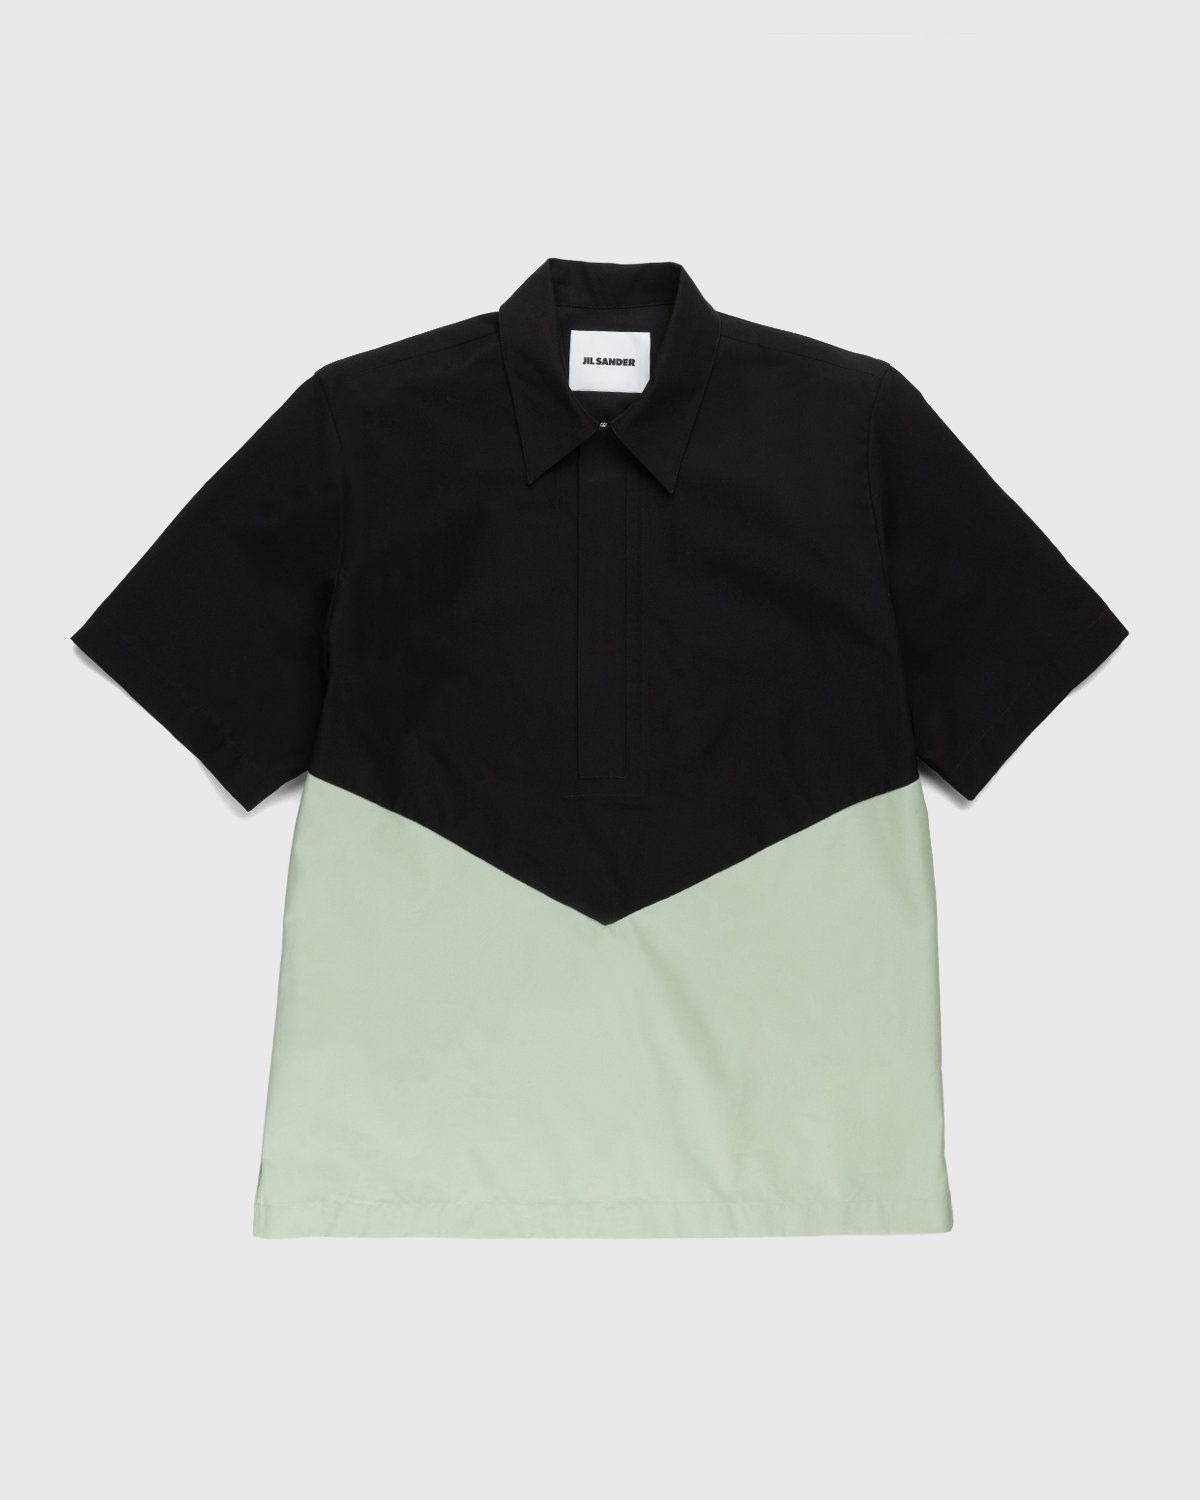 Jil Sander – Two-Tone Diagonal Cut Shirt Black/Green - Shirts - Green - Image 1